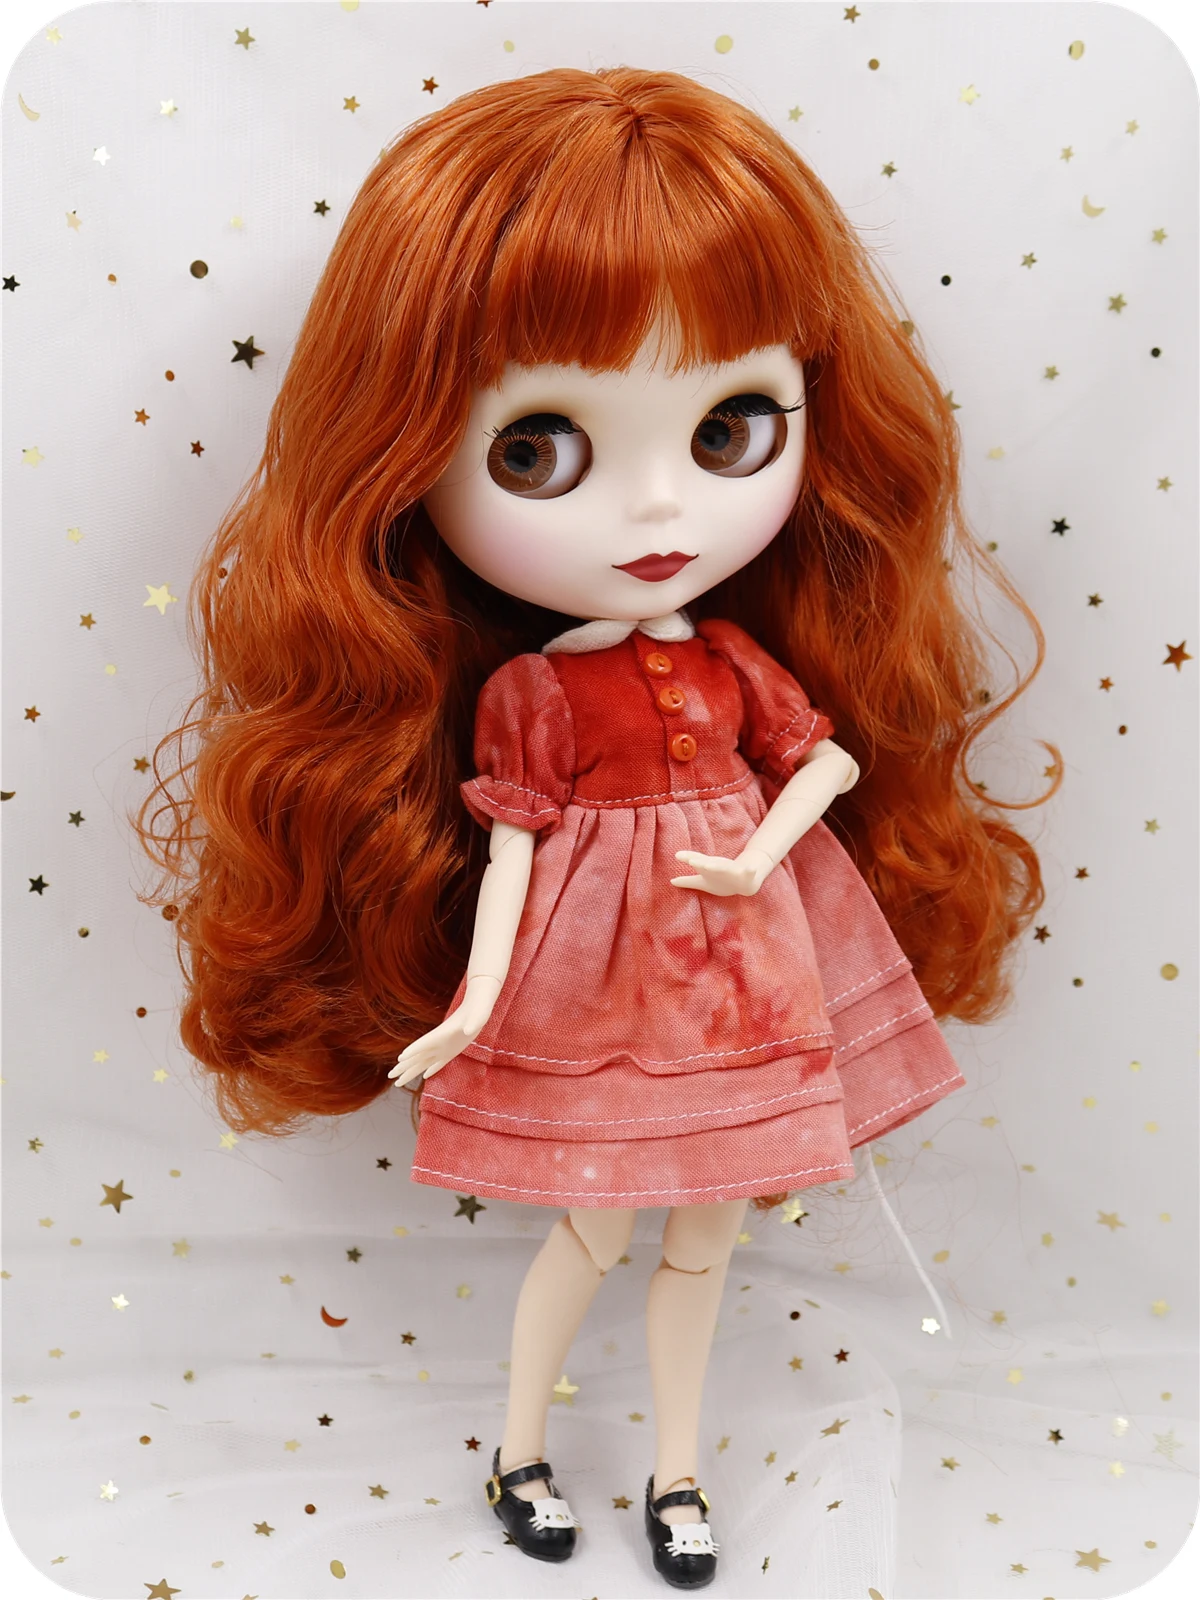 Neo Blythe Doll Tie-Dye Red Dress 2